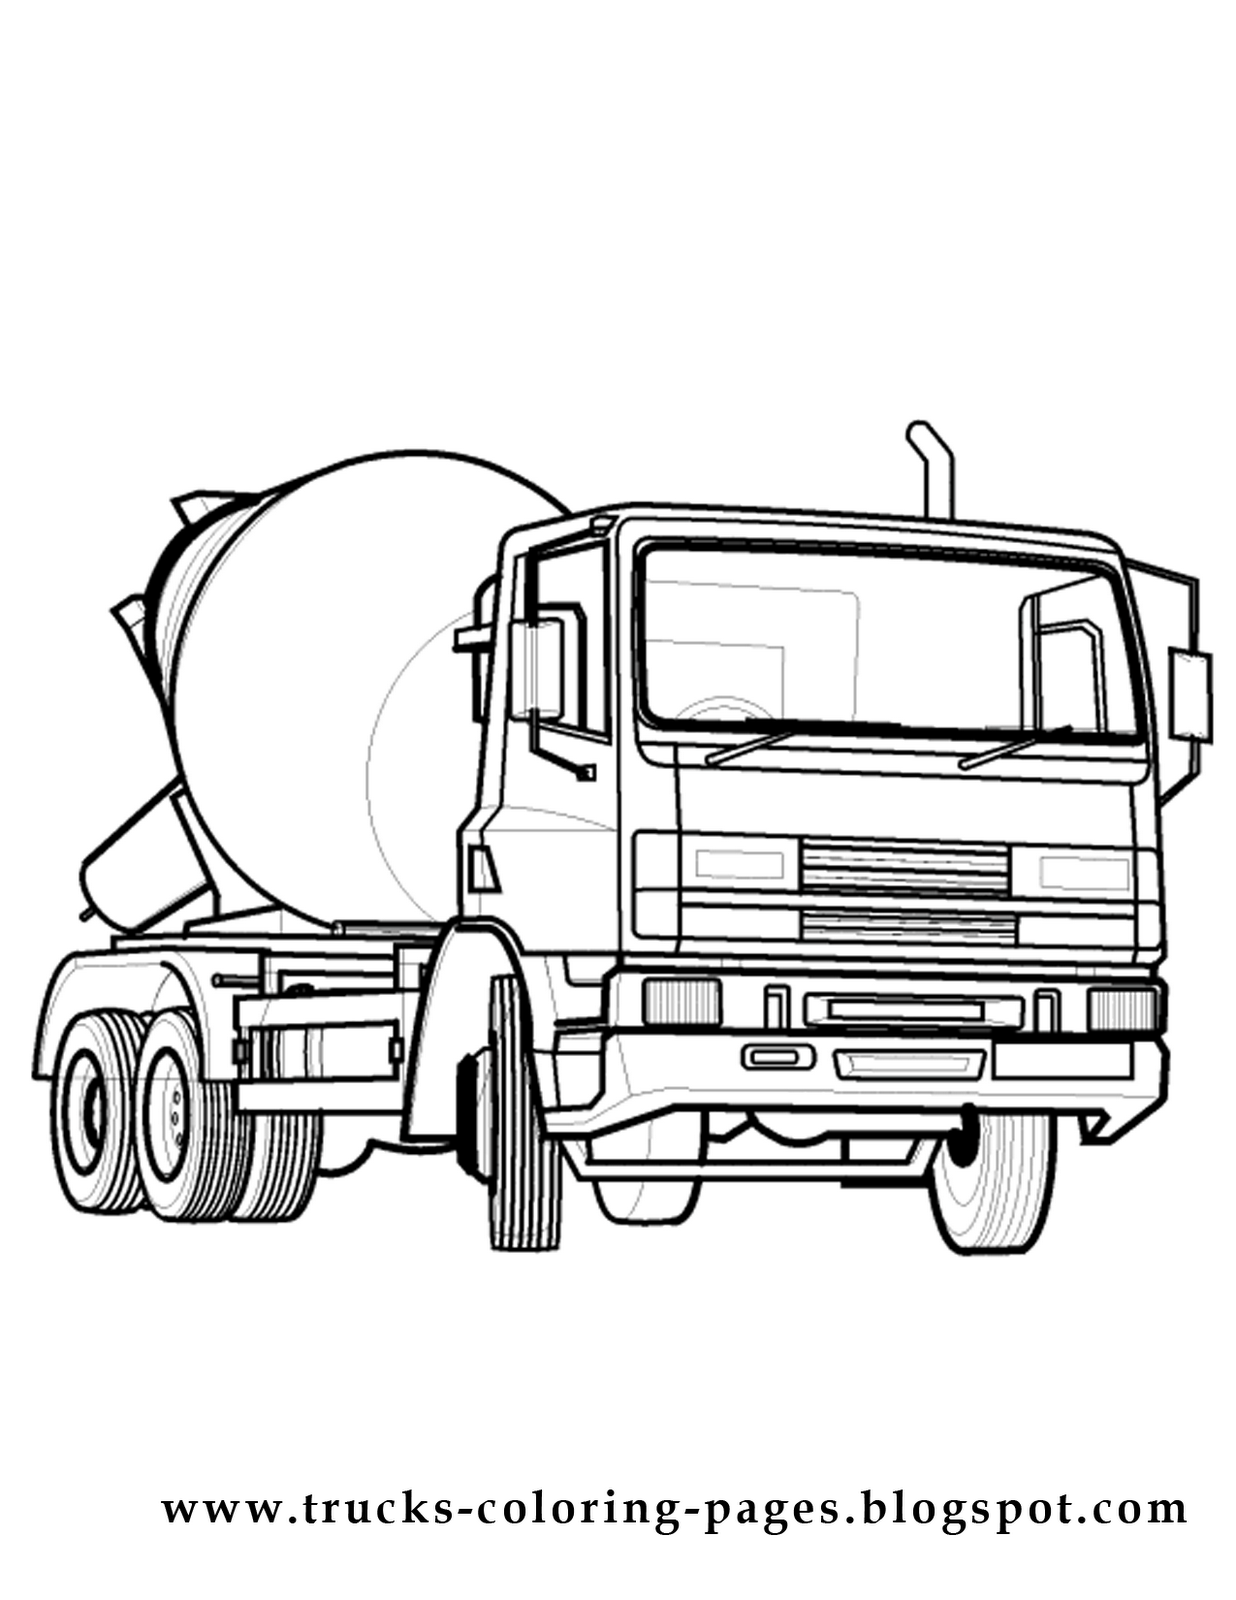  Free coloring pages trucks – letscoloringpages.com – Concret truck